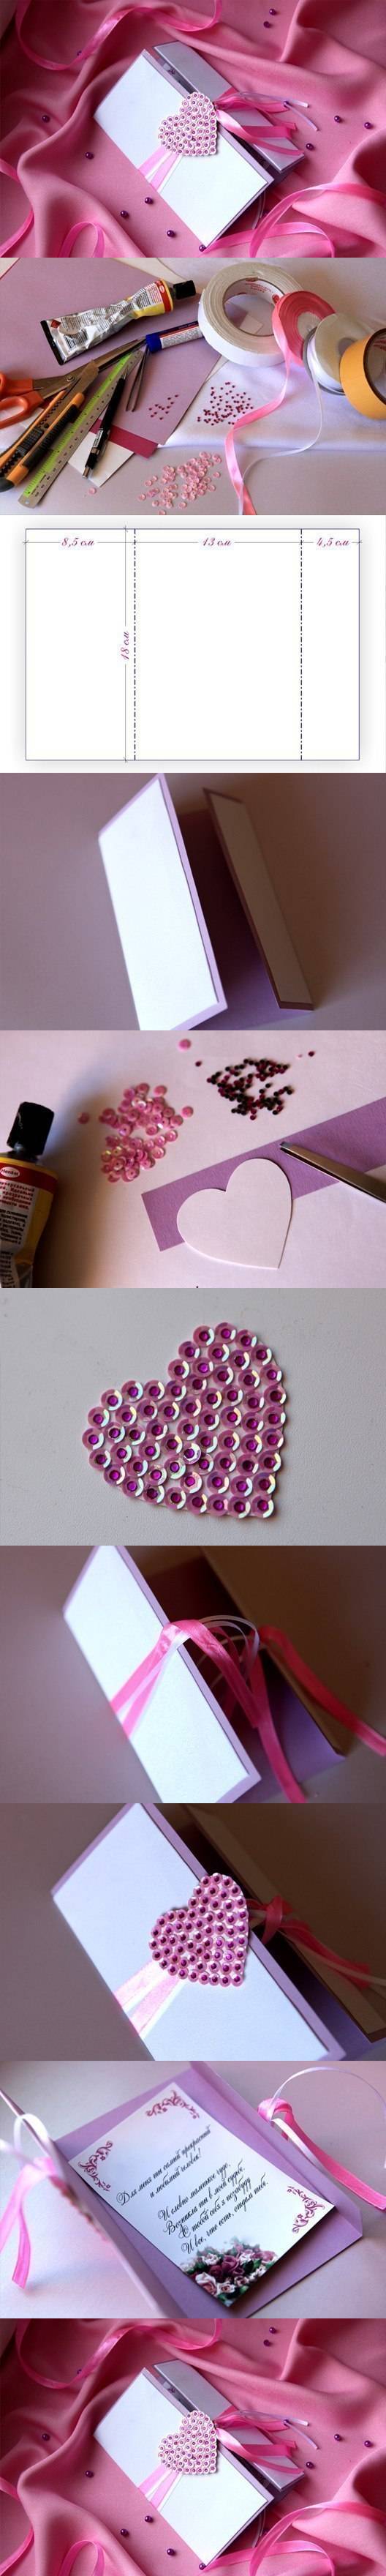 DIY Heart Greeting Card